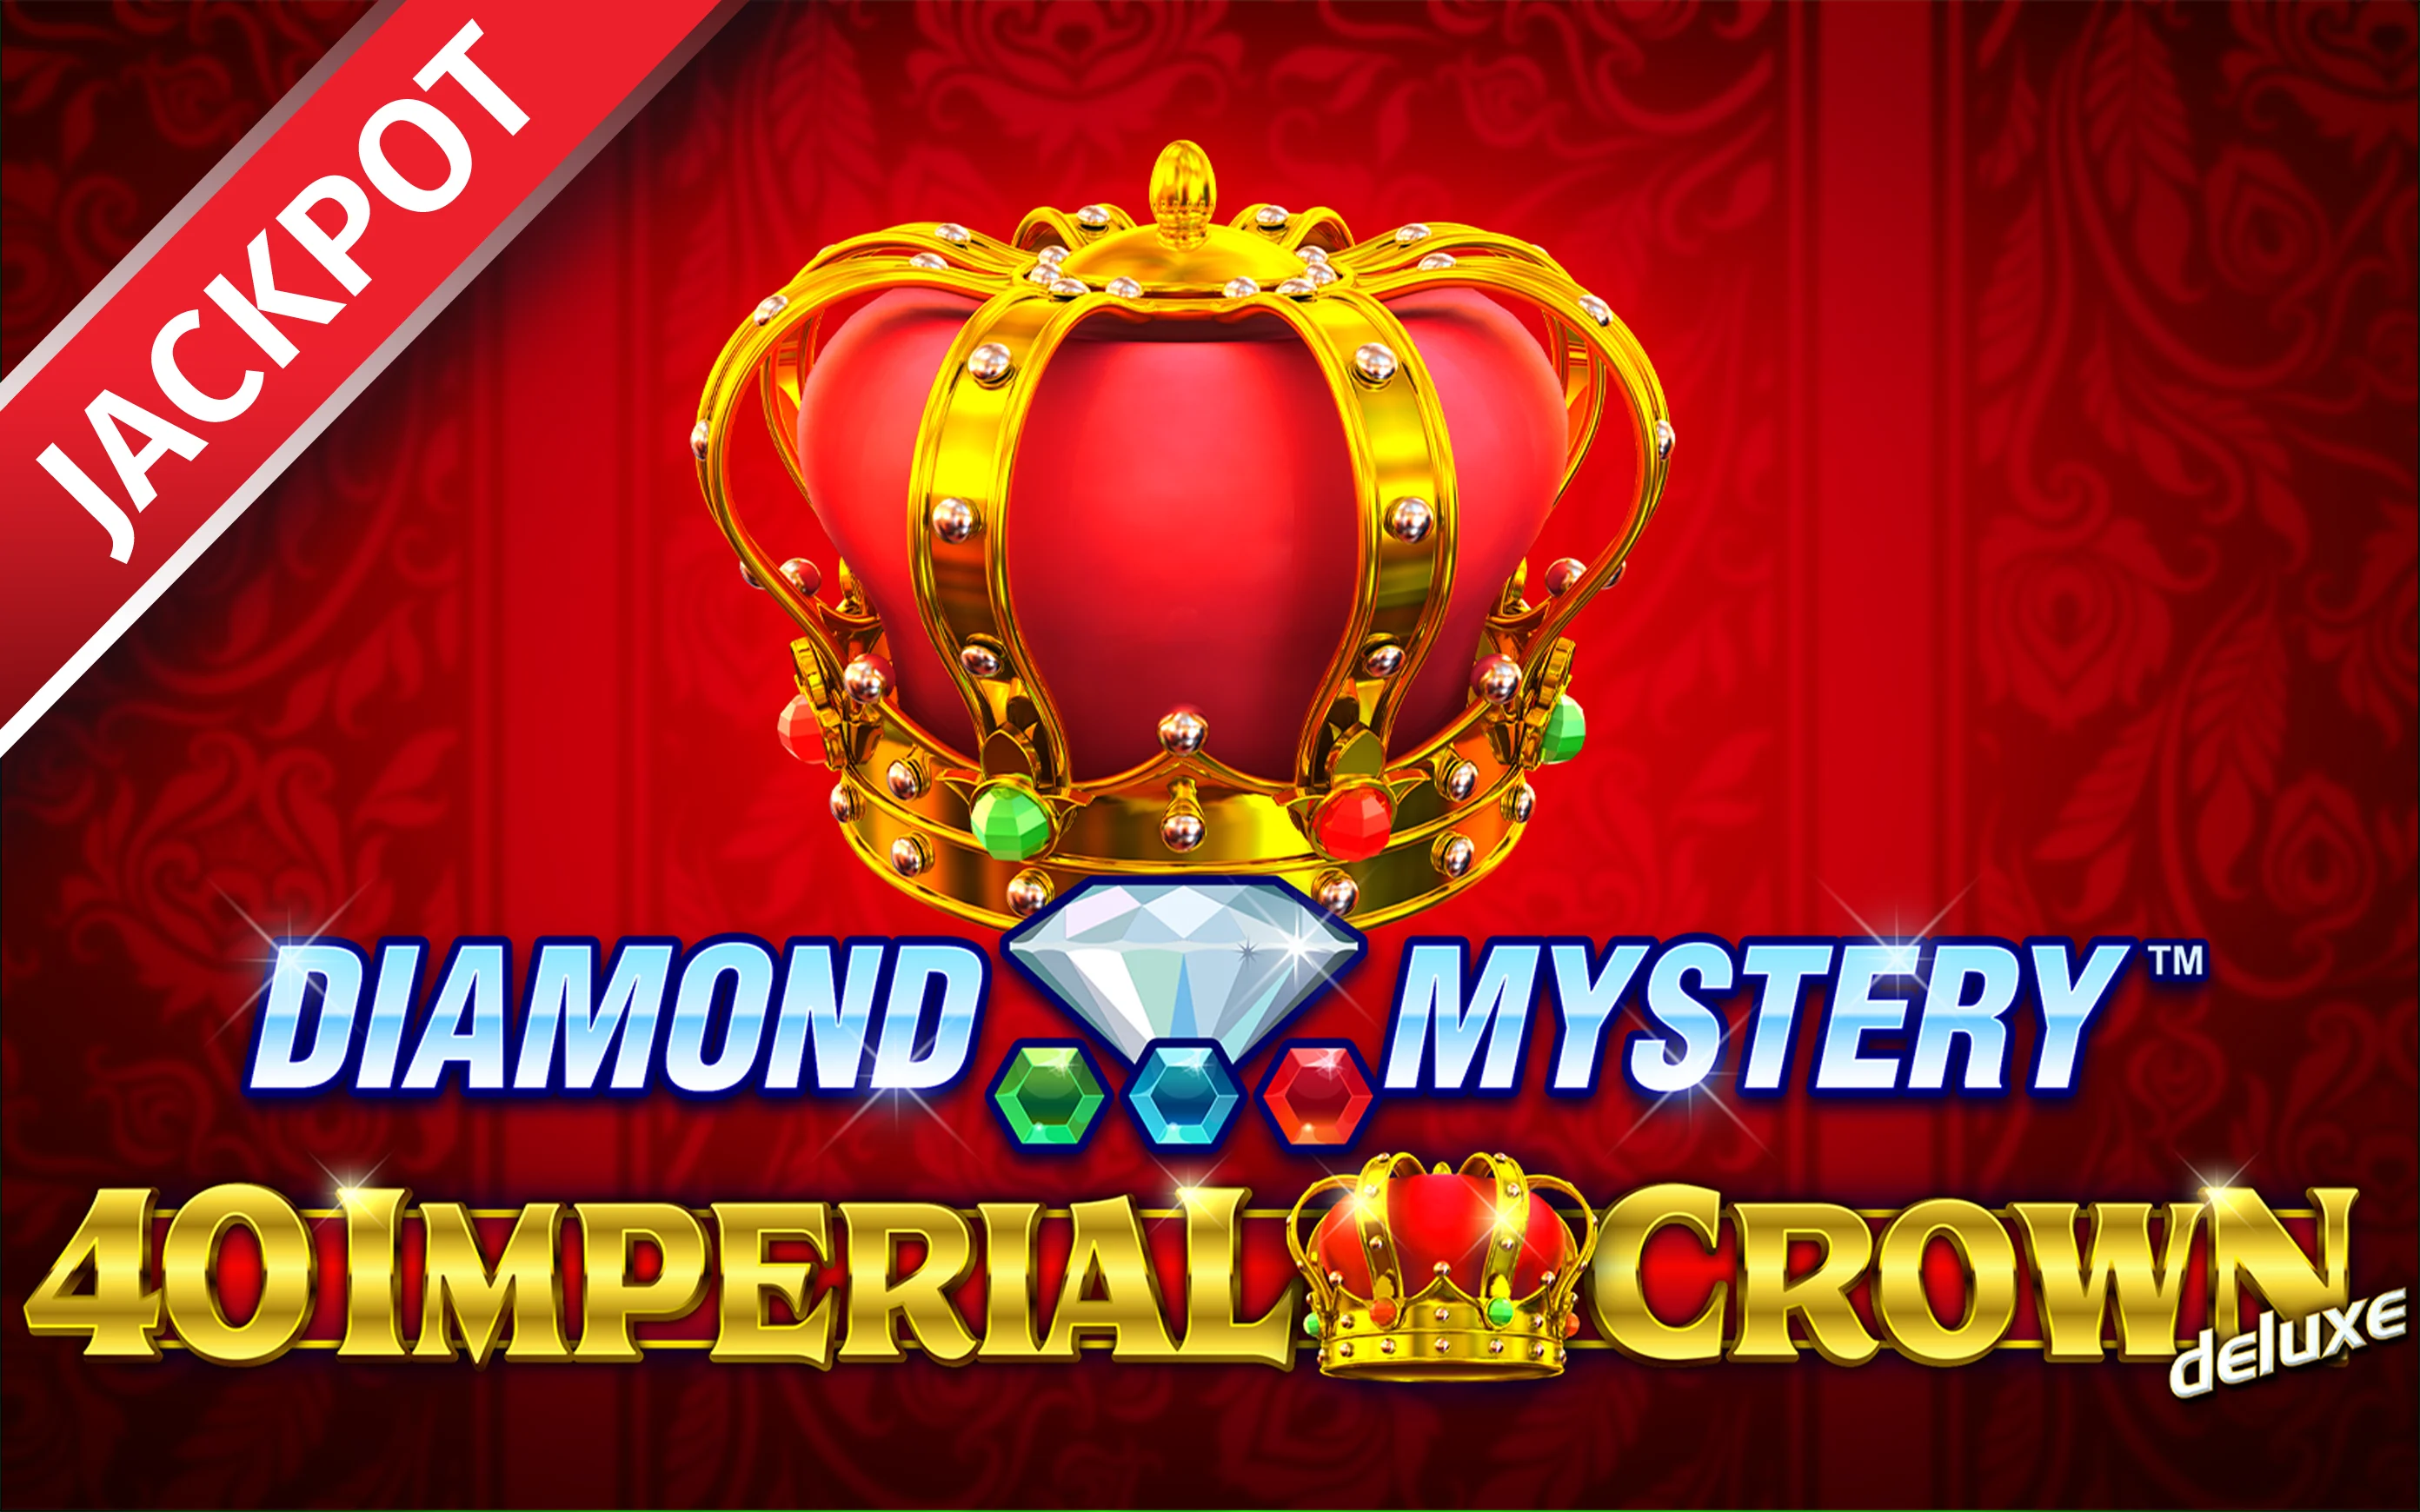 Speel Diamond Mystery™ – 40 Imperial Crown deluxe op Starcasino.be online casino